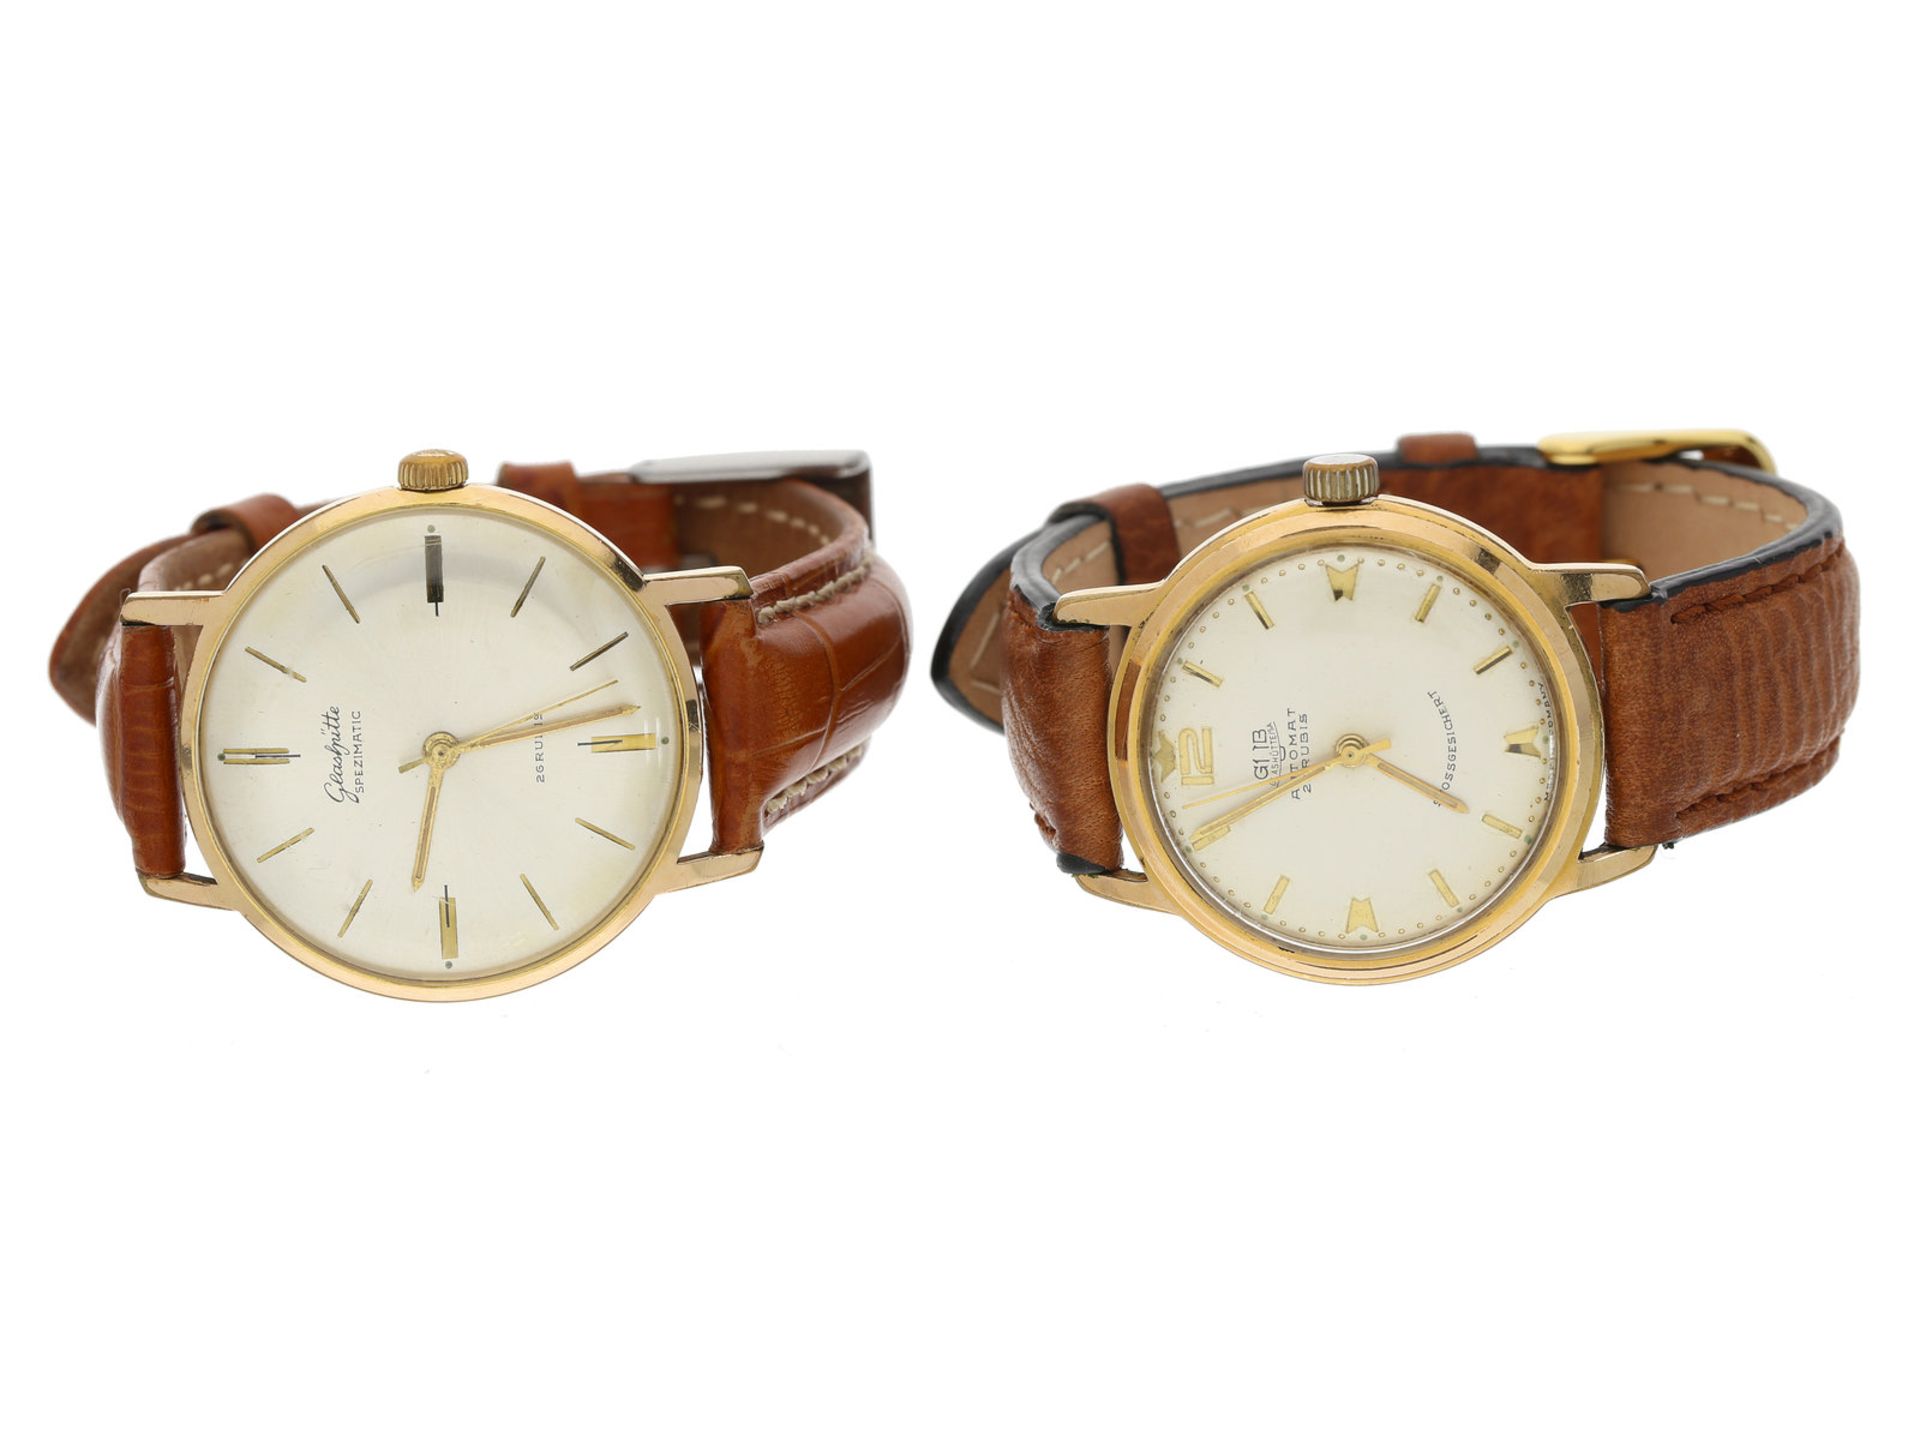 Armbanduhr: Konvolut von 2 vintage Herrenuhren, Glashütter Uhrenbetriebe GUB1. GUB "Glashütte